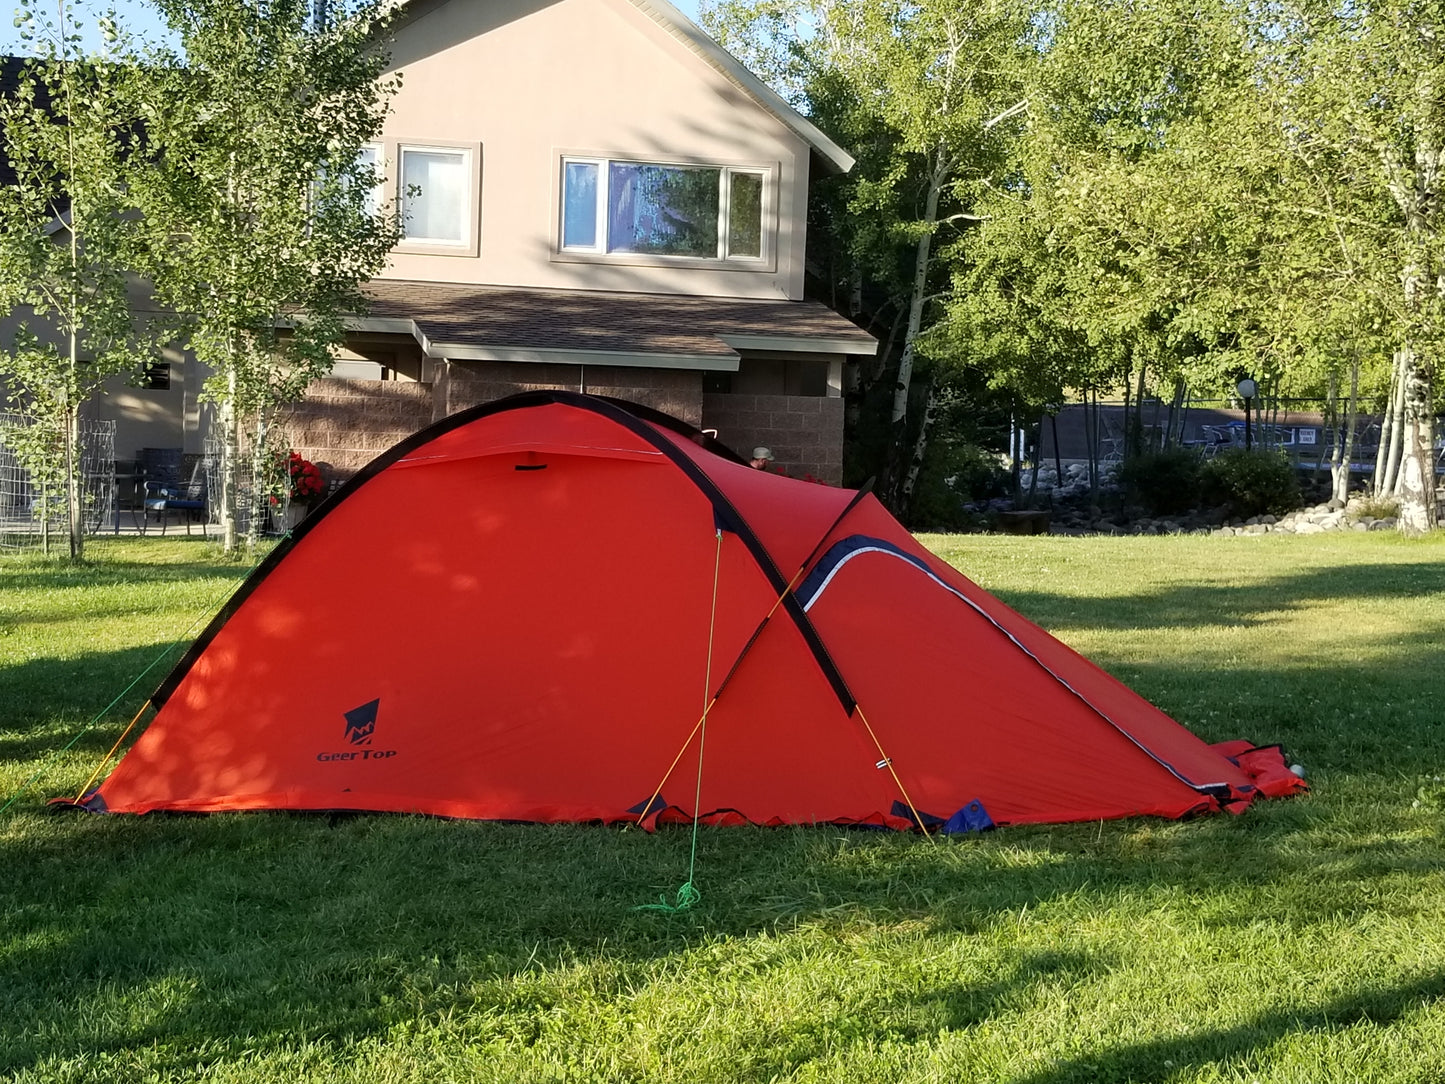 Ultralight Waterproof Alpine Tent